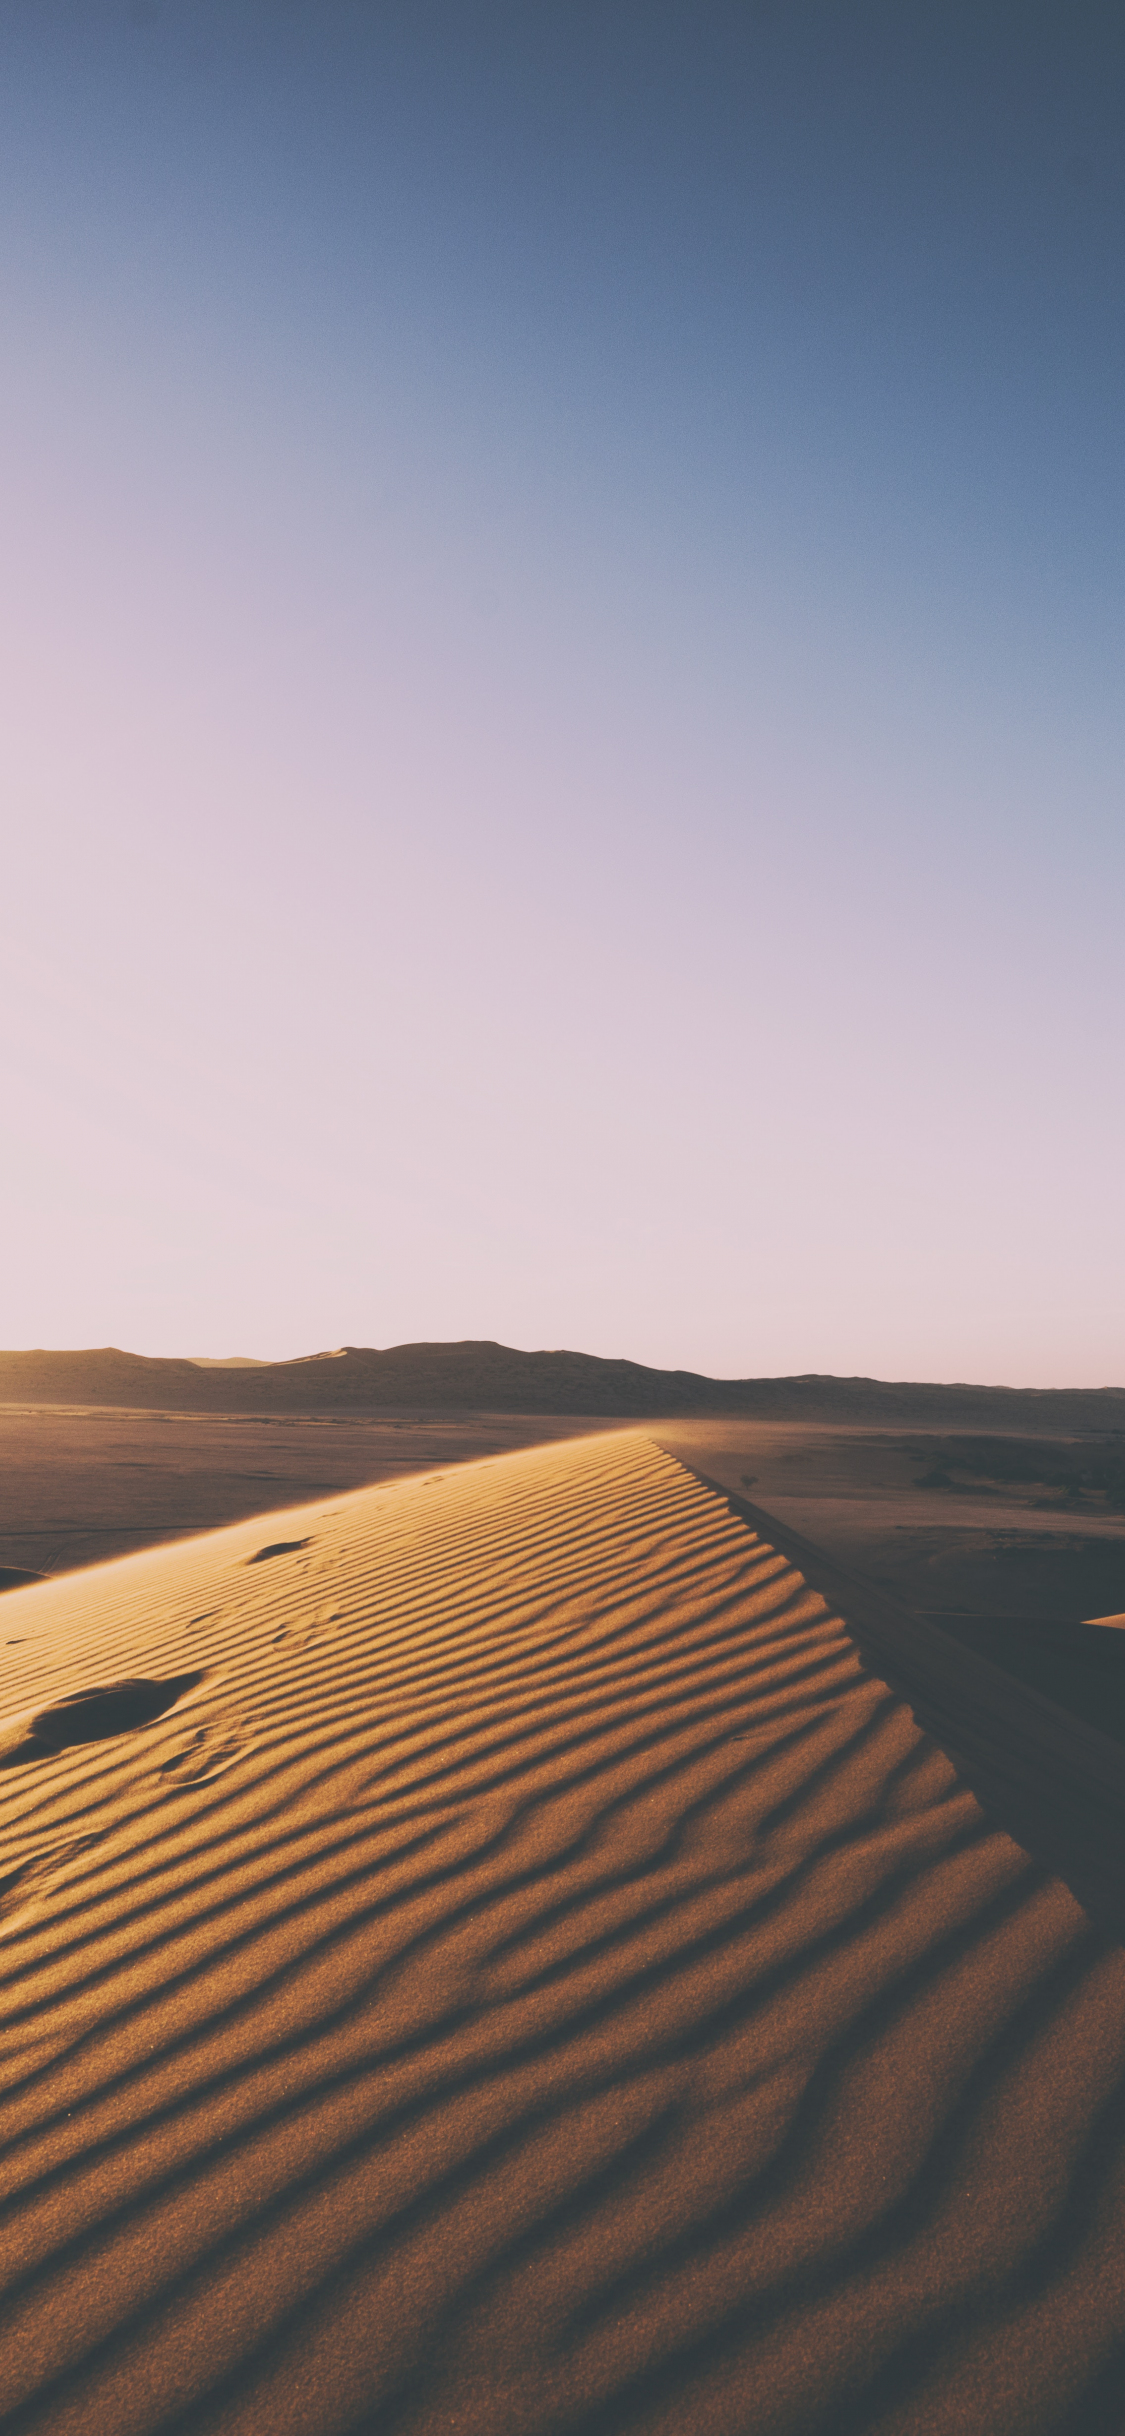 Download wallpaper 1125x2436 desert, sunset, clean skyline, sand, dunes,  iphone x, 1125x2436 hd background, 528